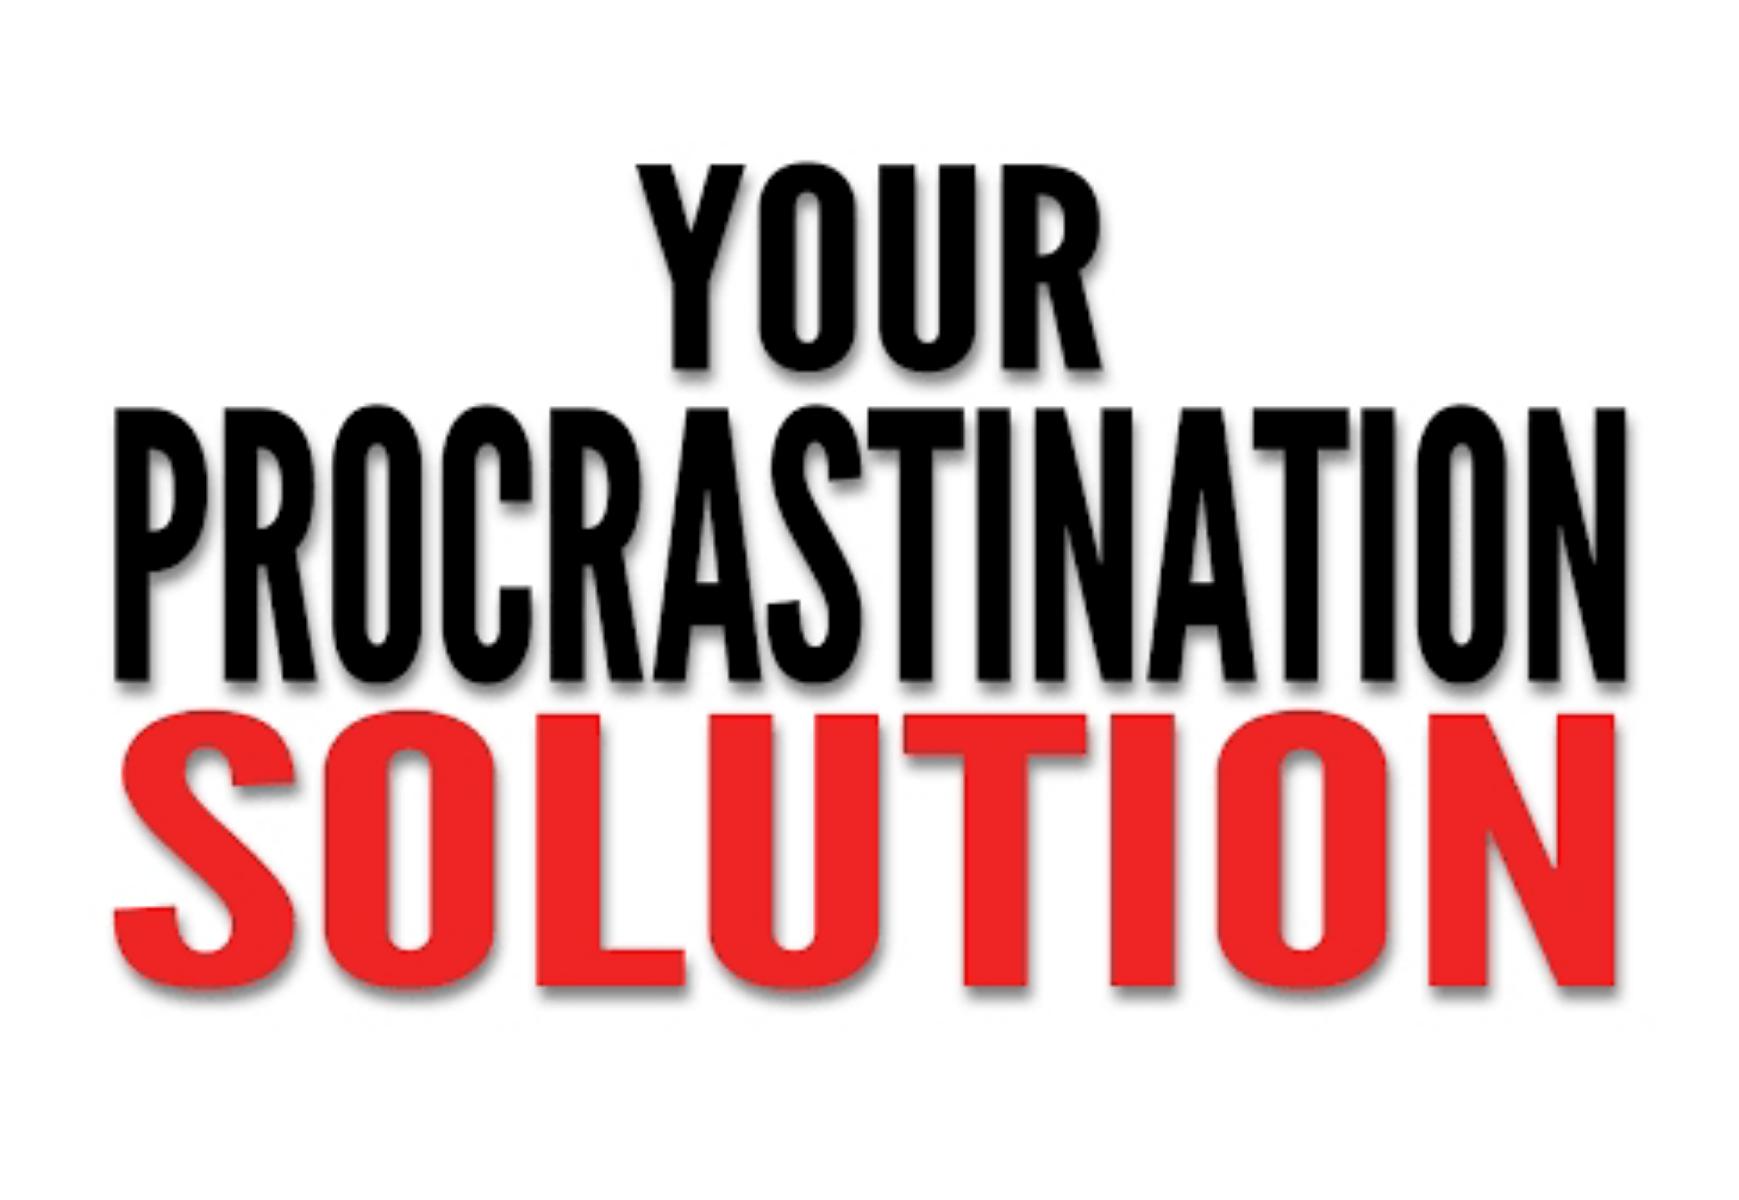 Reasons for procrastination